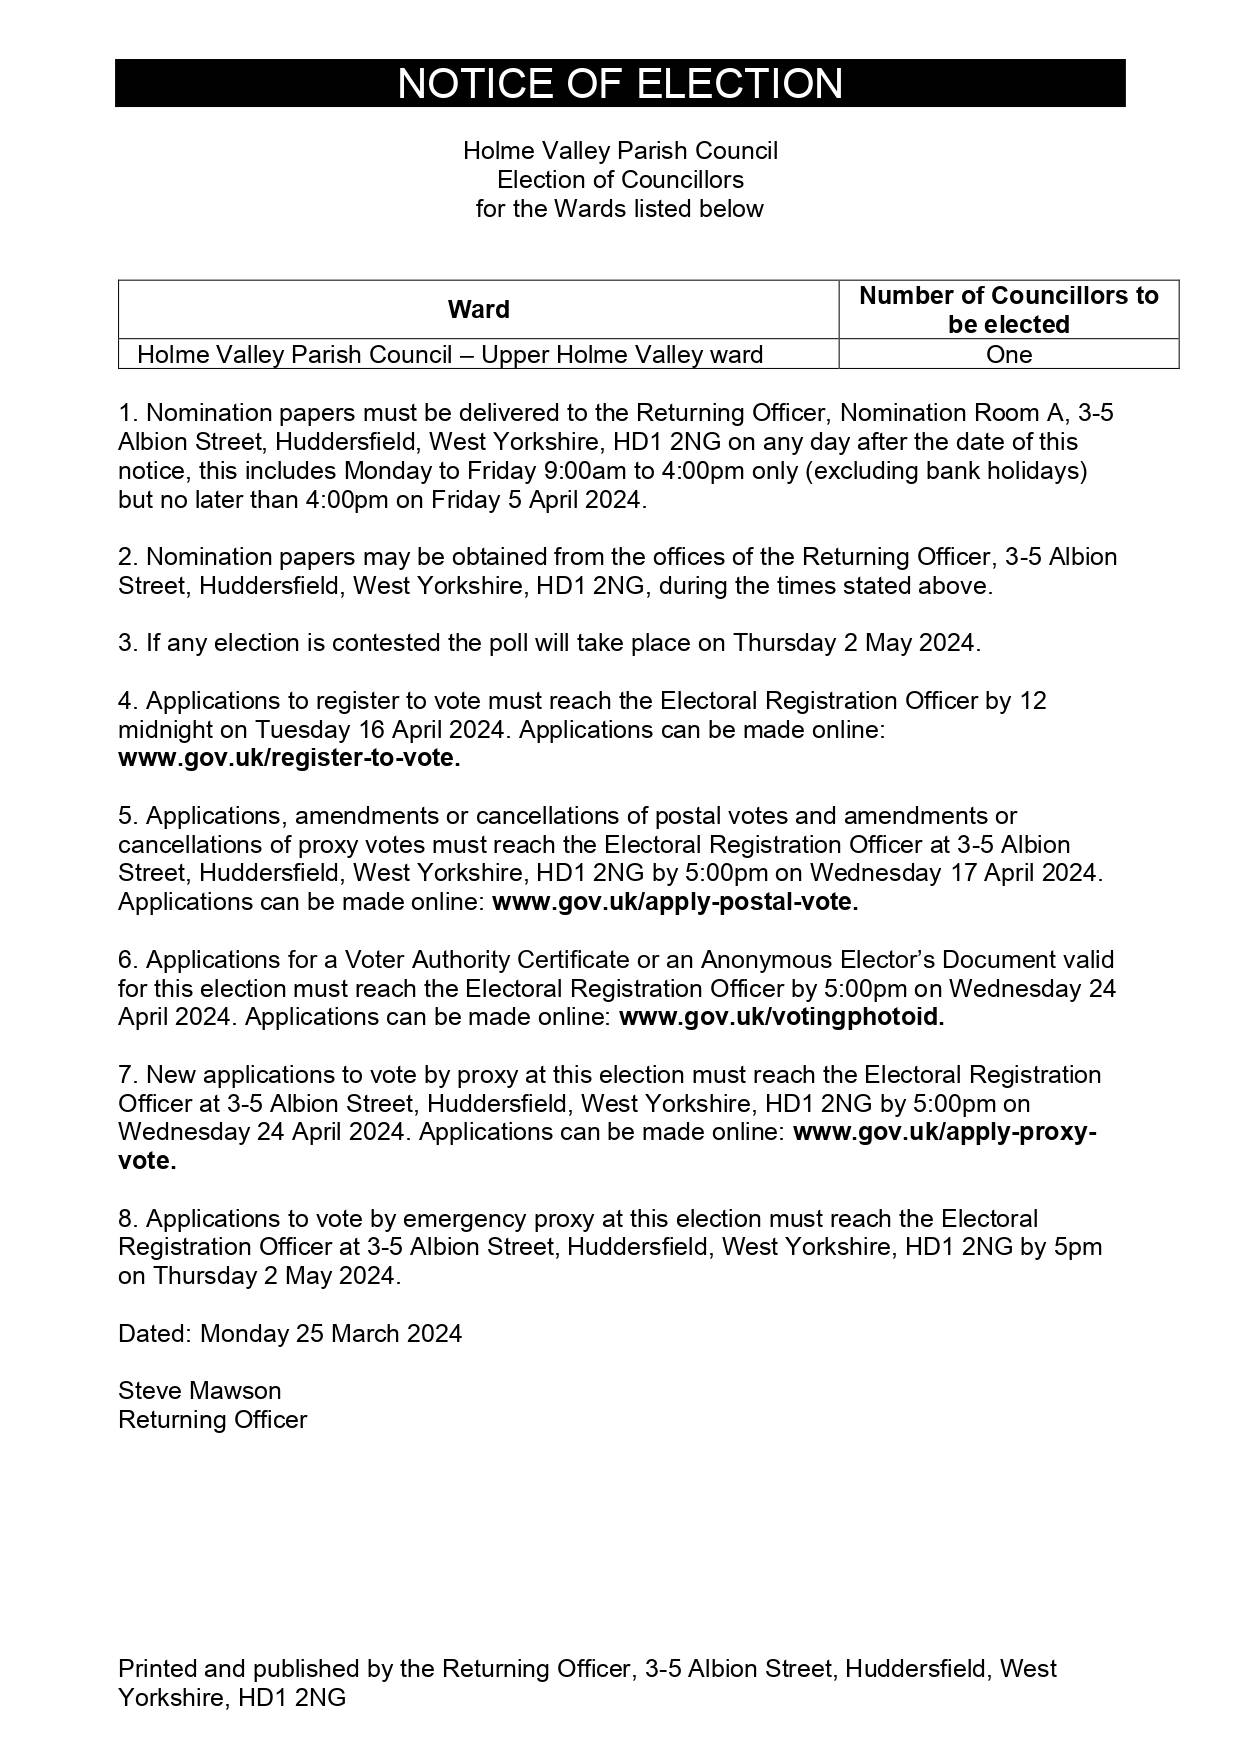 Notice of Election - Upper Holme Valley